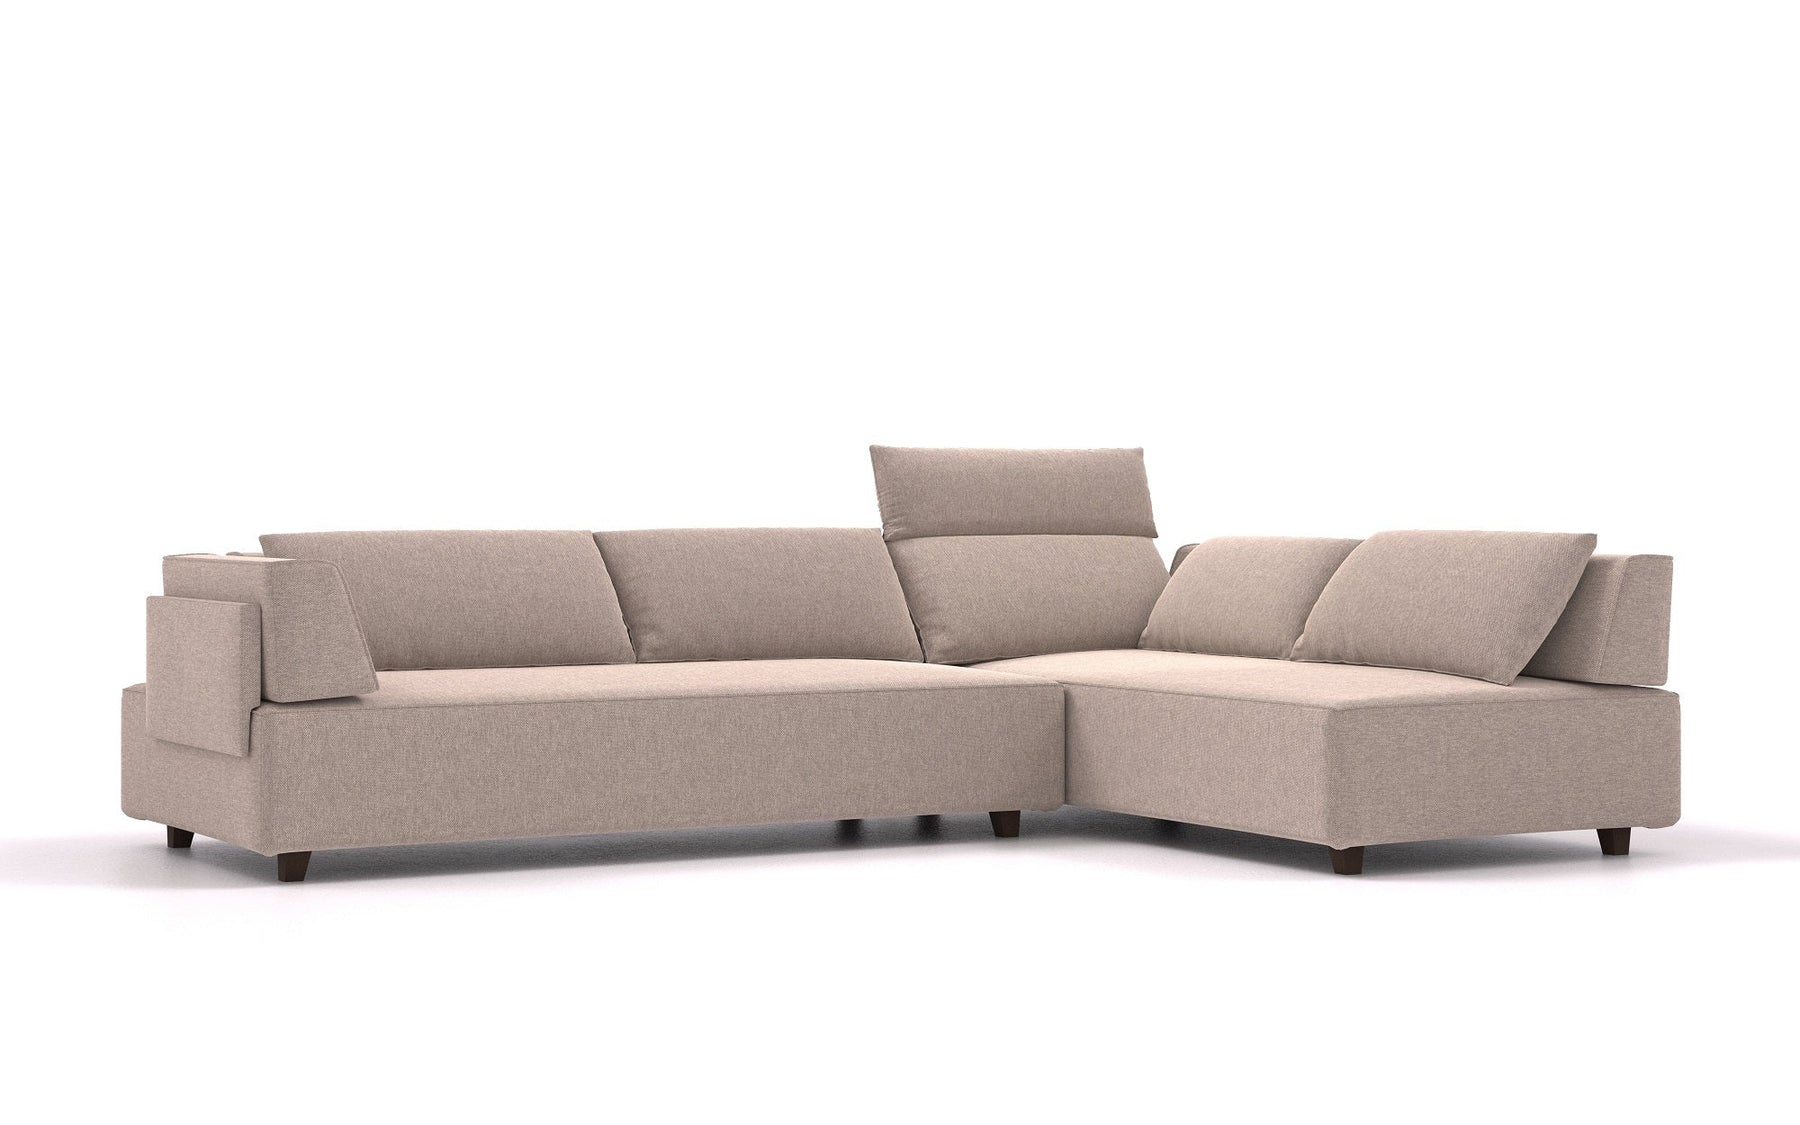 Modular Sofa With Sleep Function Livom